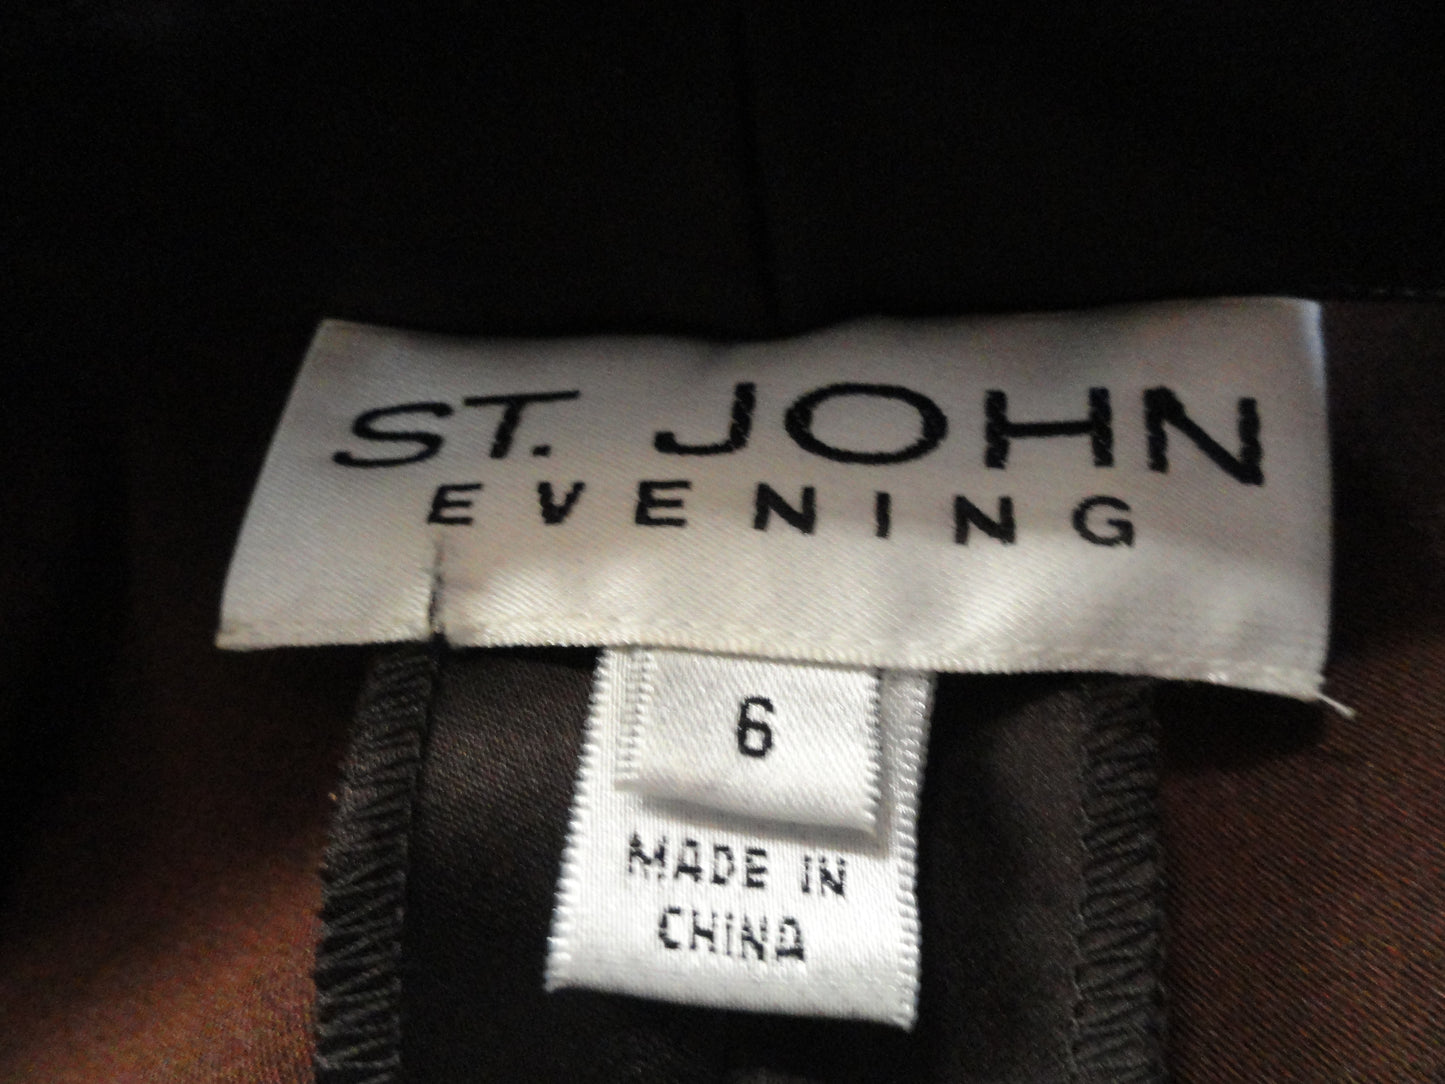 St. John Women's Pants Dark Brown Size 6 SKU 000239-11